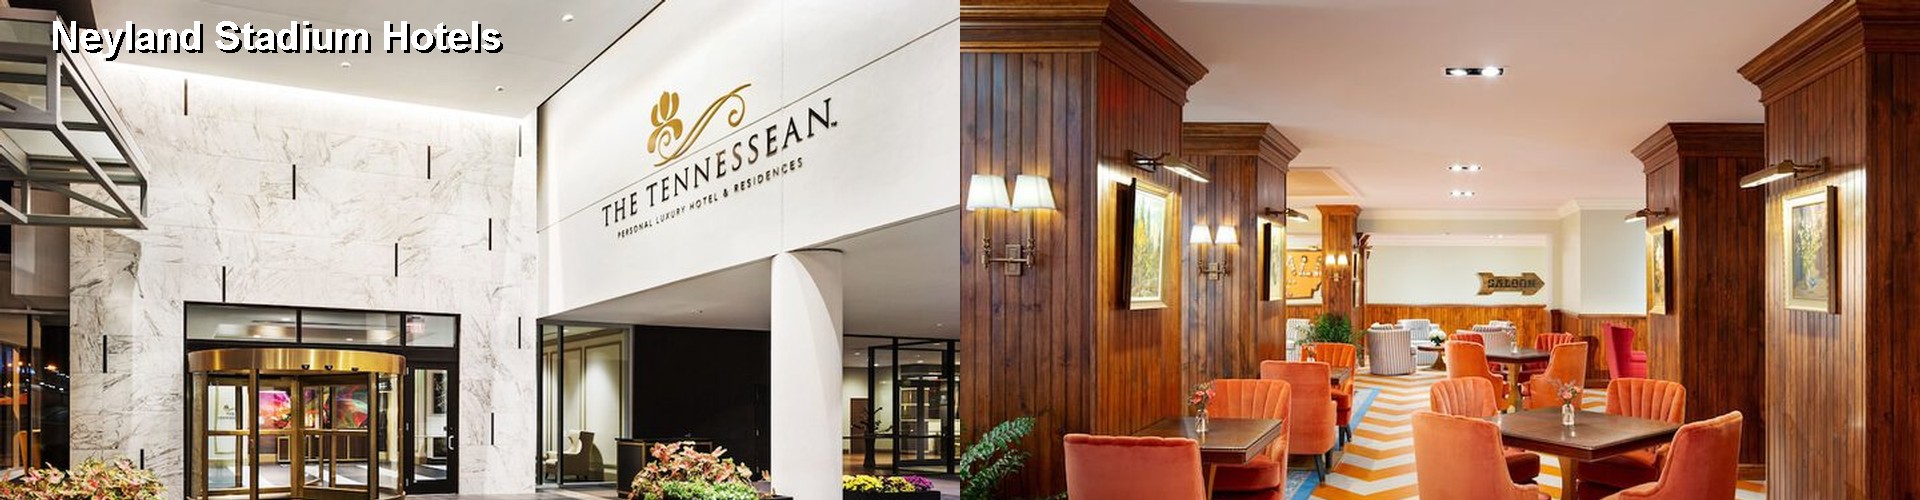 5 Best Hotels near Neyland Stadium